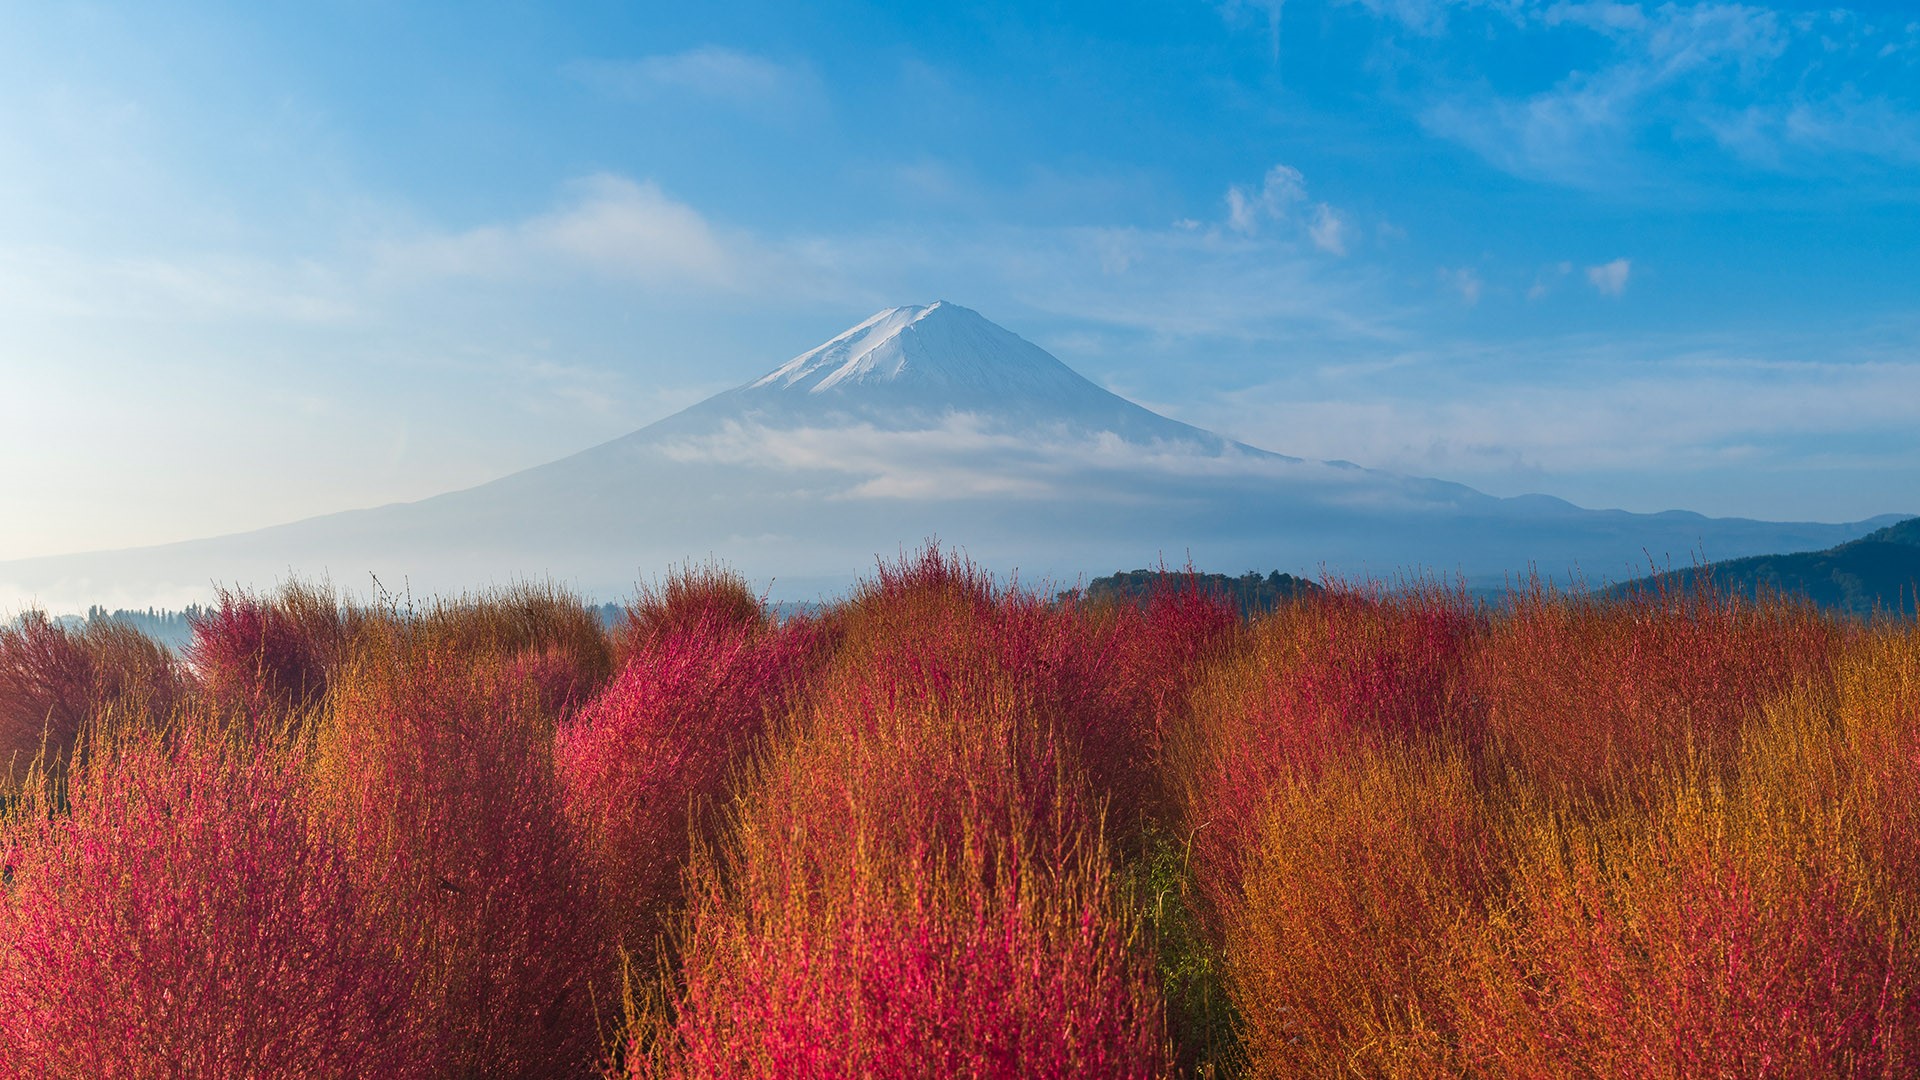 General 1920x1080 nature landscape plants clouds sky mountains sunrise bushes Yamanashi Mount Fuji Japan